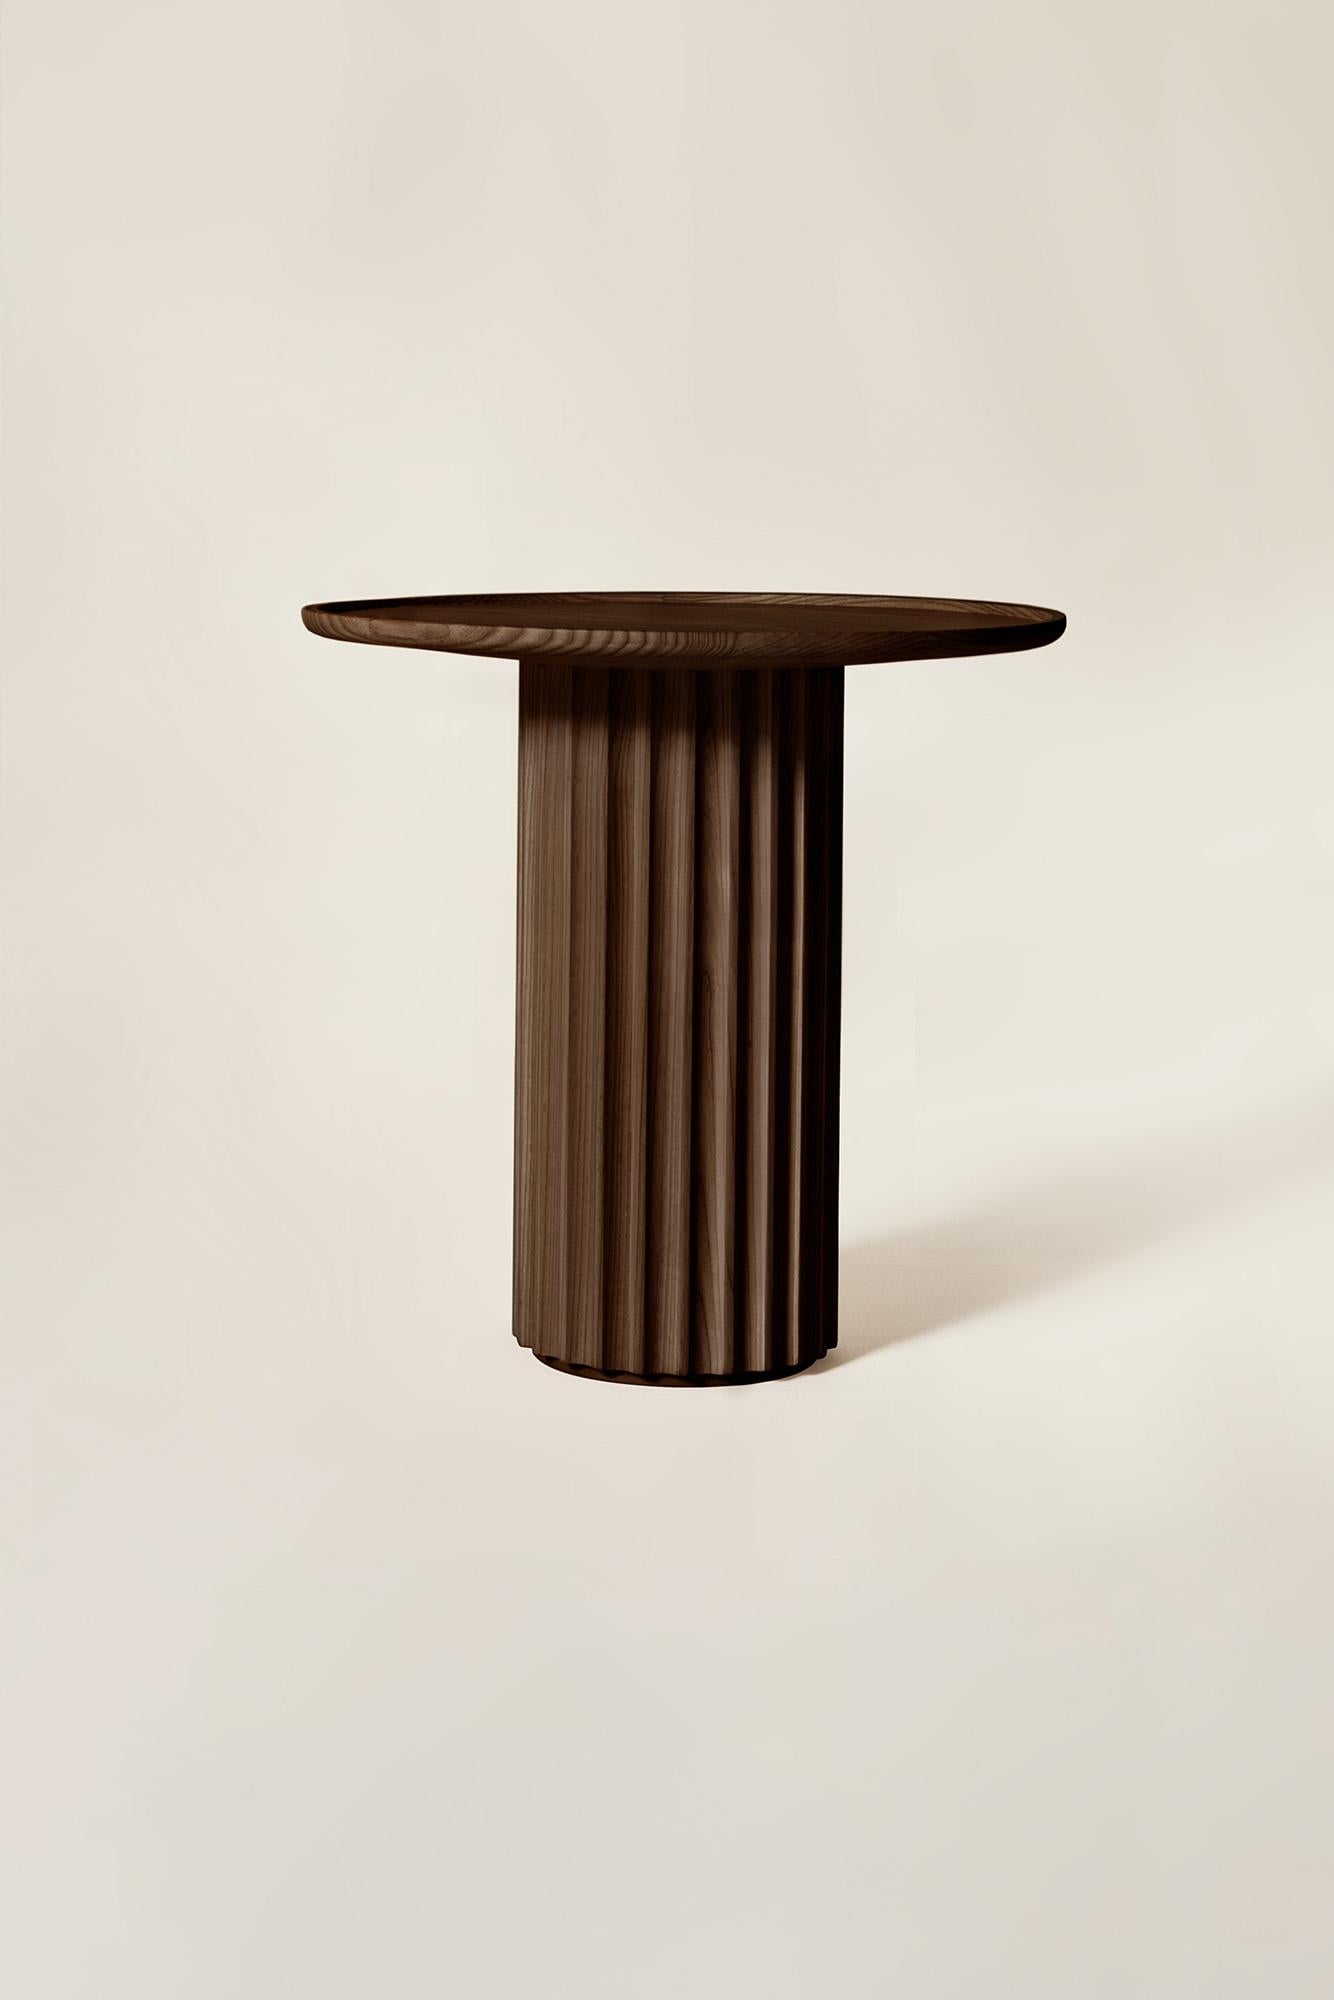 Moderne Table basse Capitello en bois massif, finition en frêne brun, contemporaine en vente